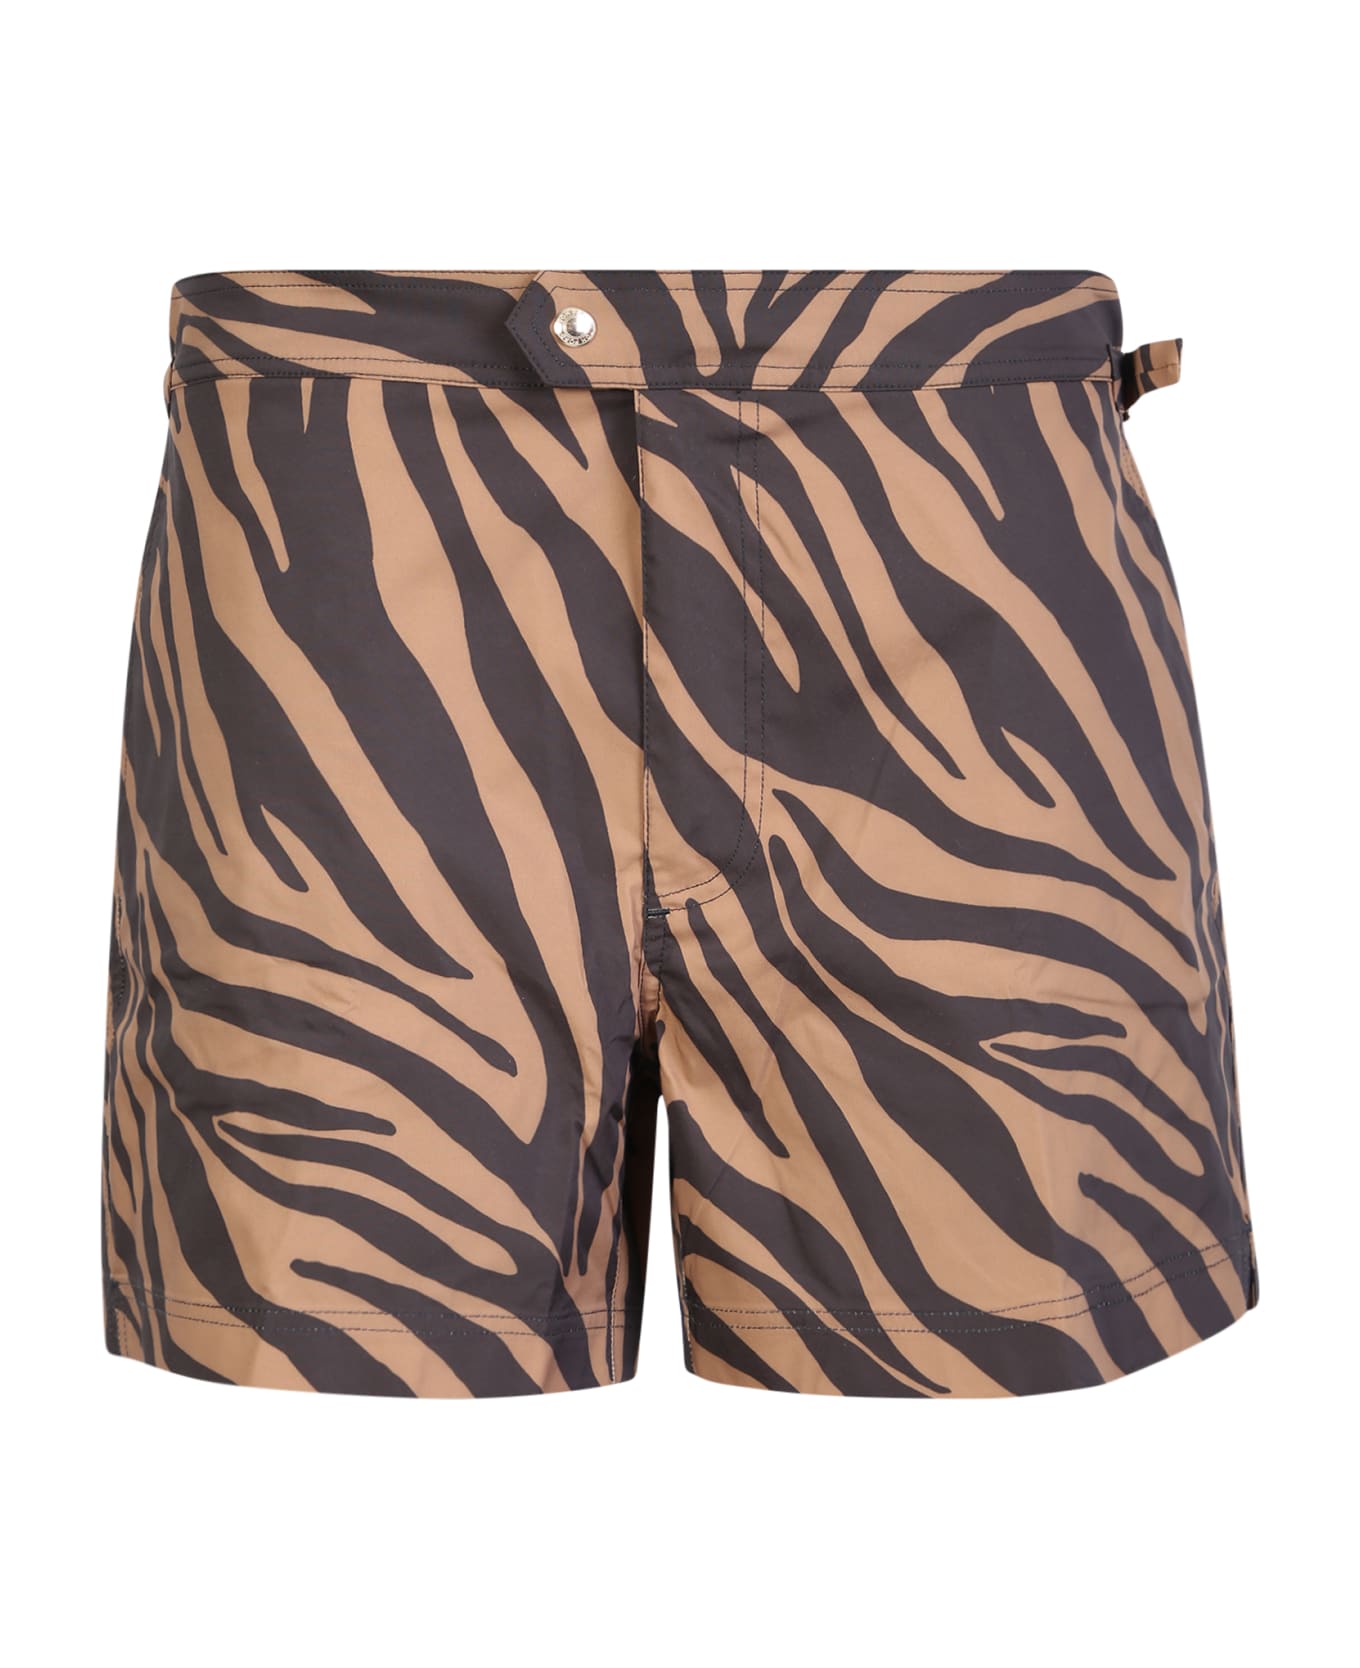 Tom Ford Zebra Print Swim Shorts - Beige 水着